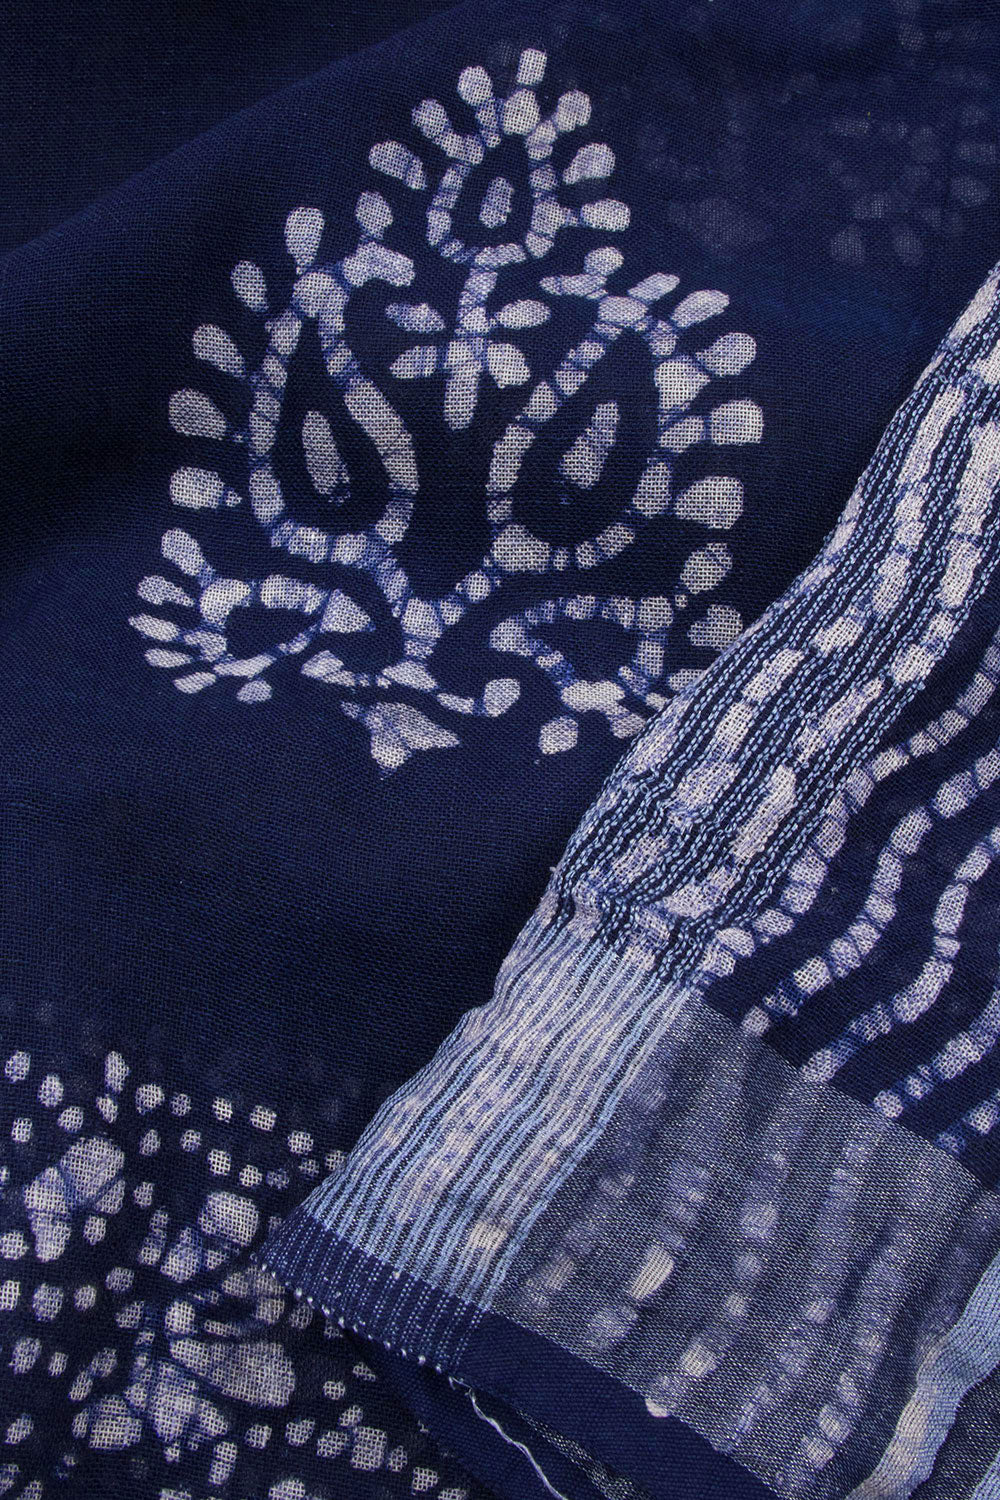 Dark Blue Batik Printed Linen Cotton Saree - 10063864